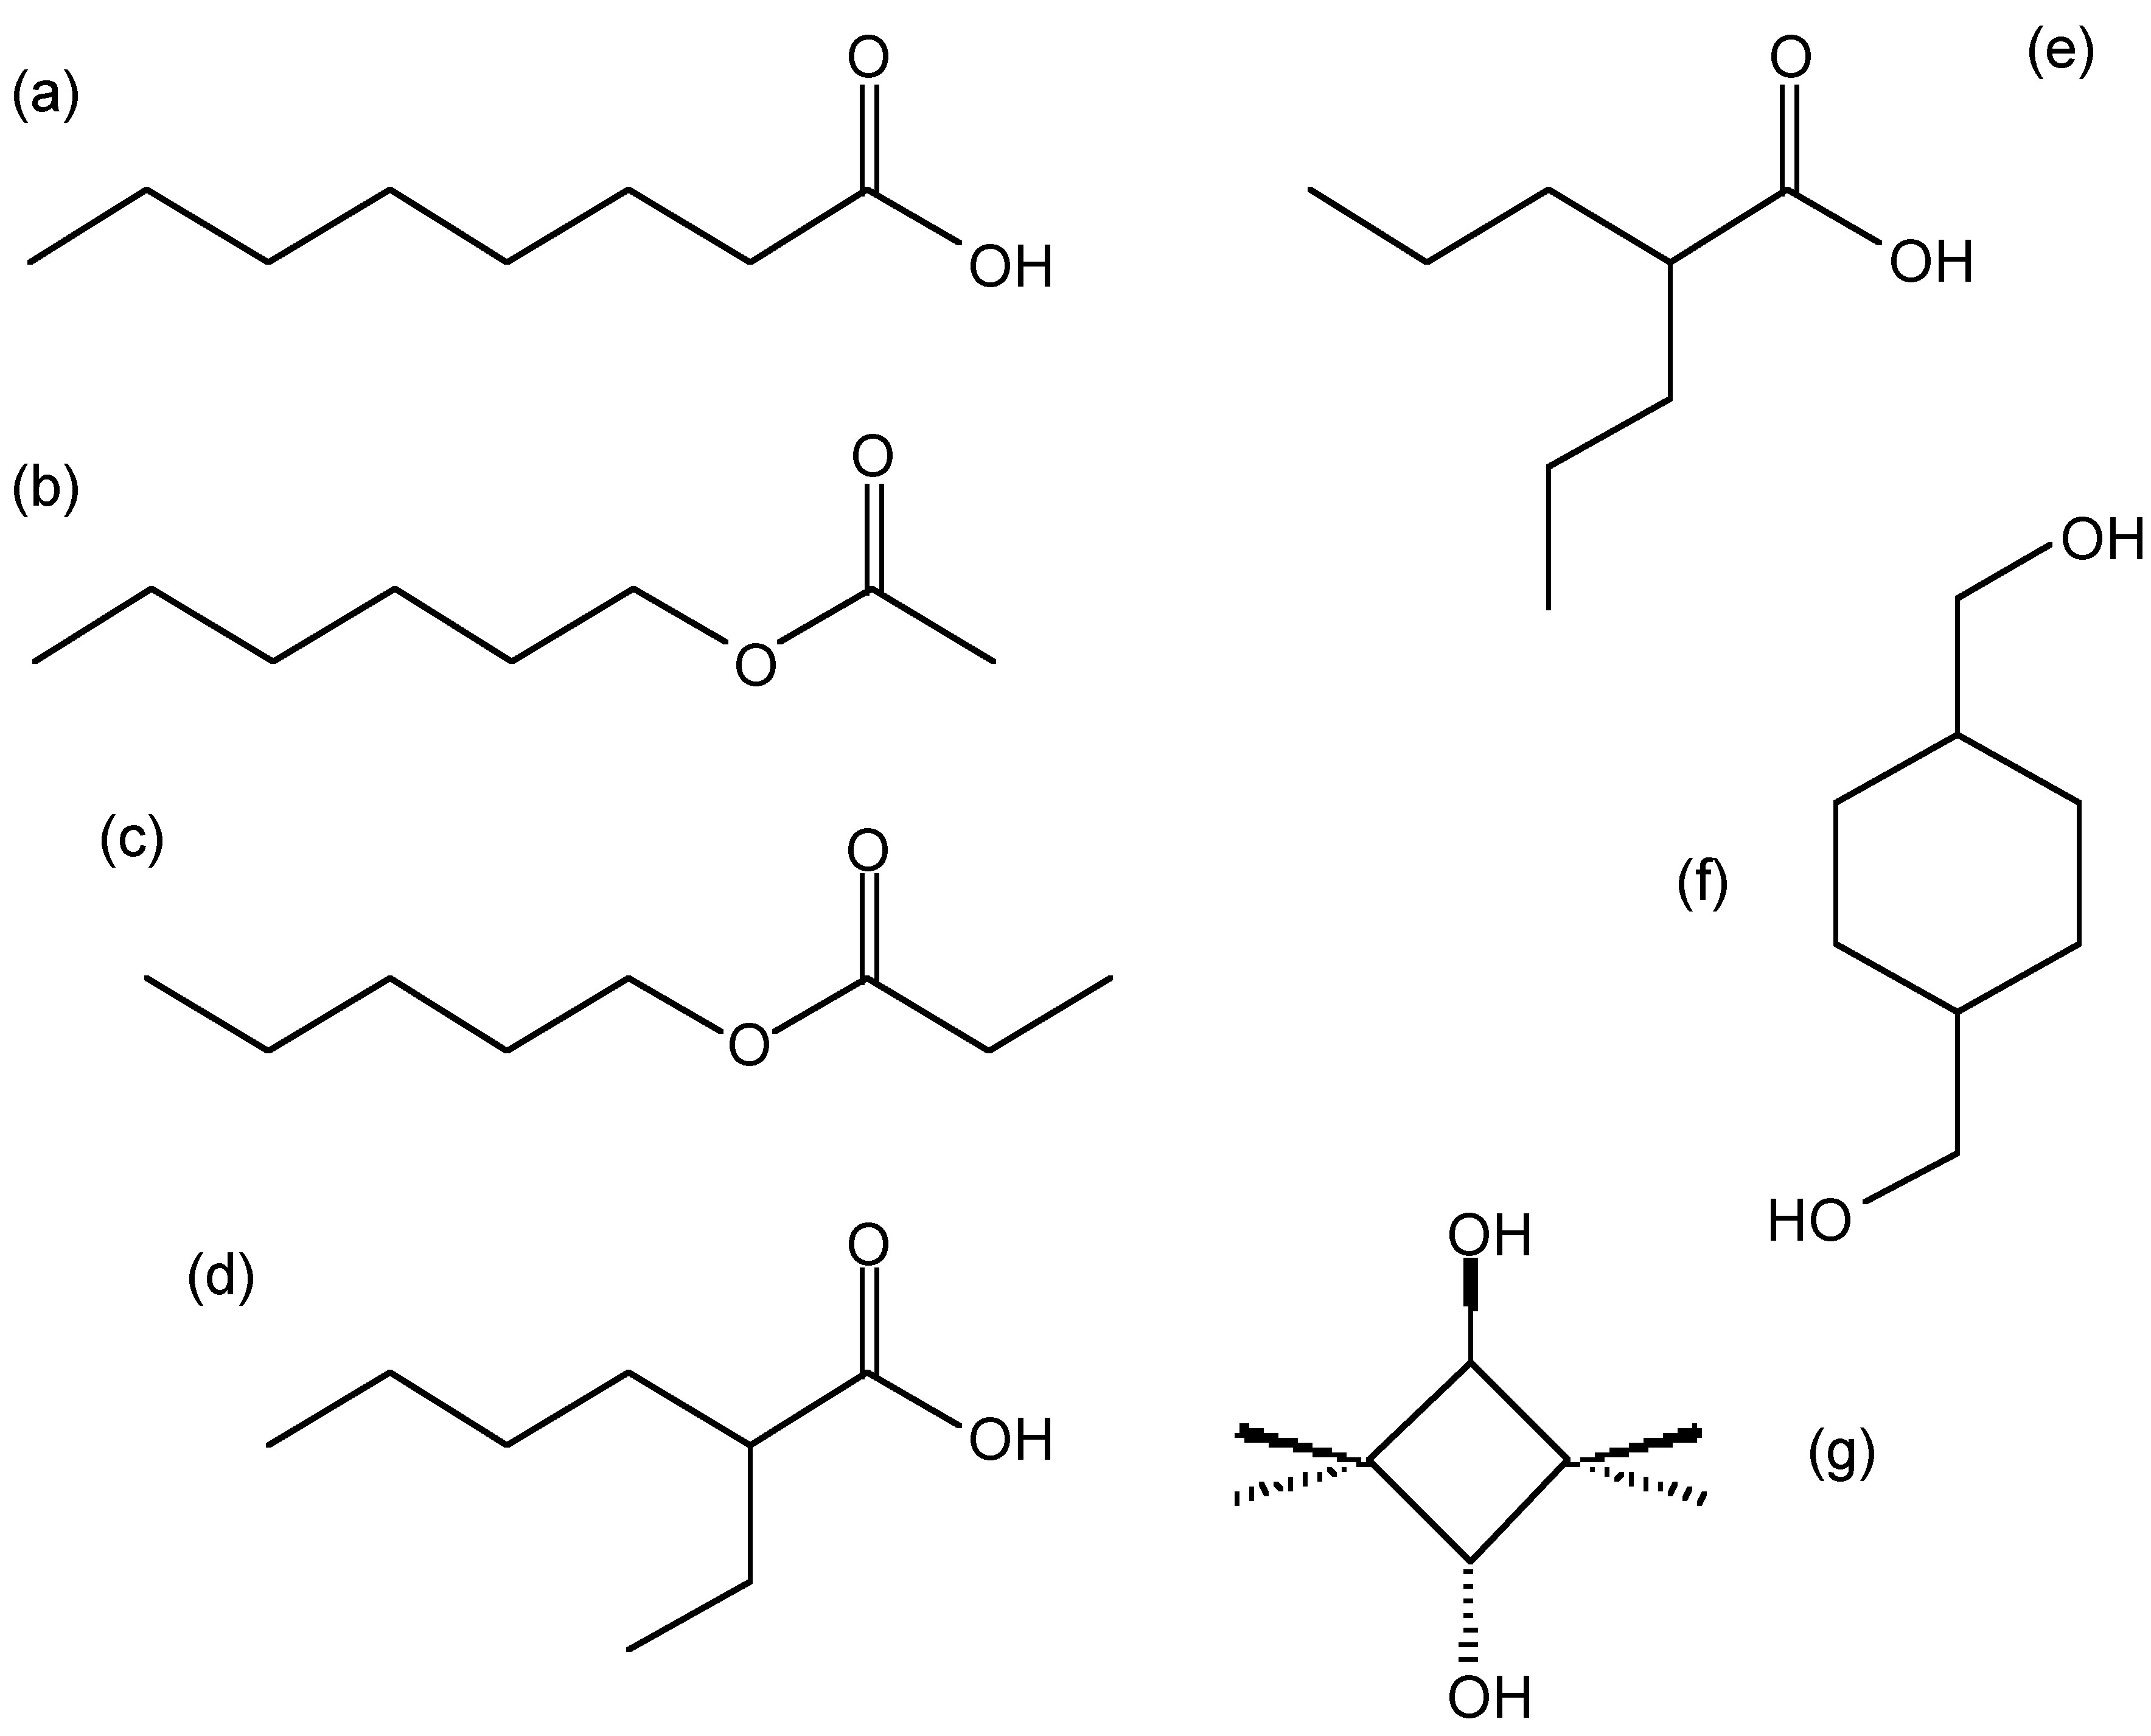 Structure of possible compounds with the molecular formula C8H16O2: (a) octanoic acid (caprylic acid), (b) hexyl acetate, (c) pentyl proponate, (d) 2-ethyl hexanoic acid, (e) valproic acid (VPA), (f) cyclohexanedimethanol (CHDM), and (g) 2,2,4,4-tetramethyl-1,3-cyclobutandiol (CBDO).